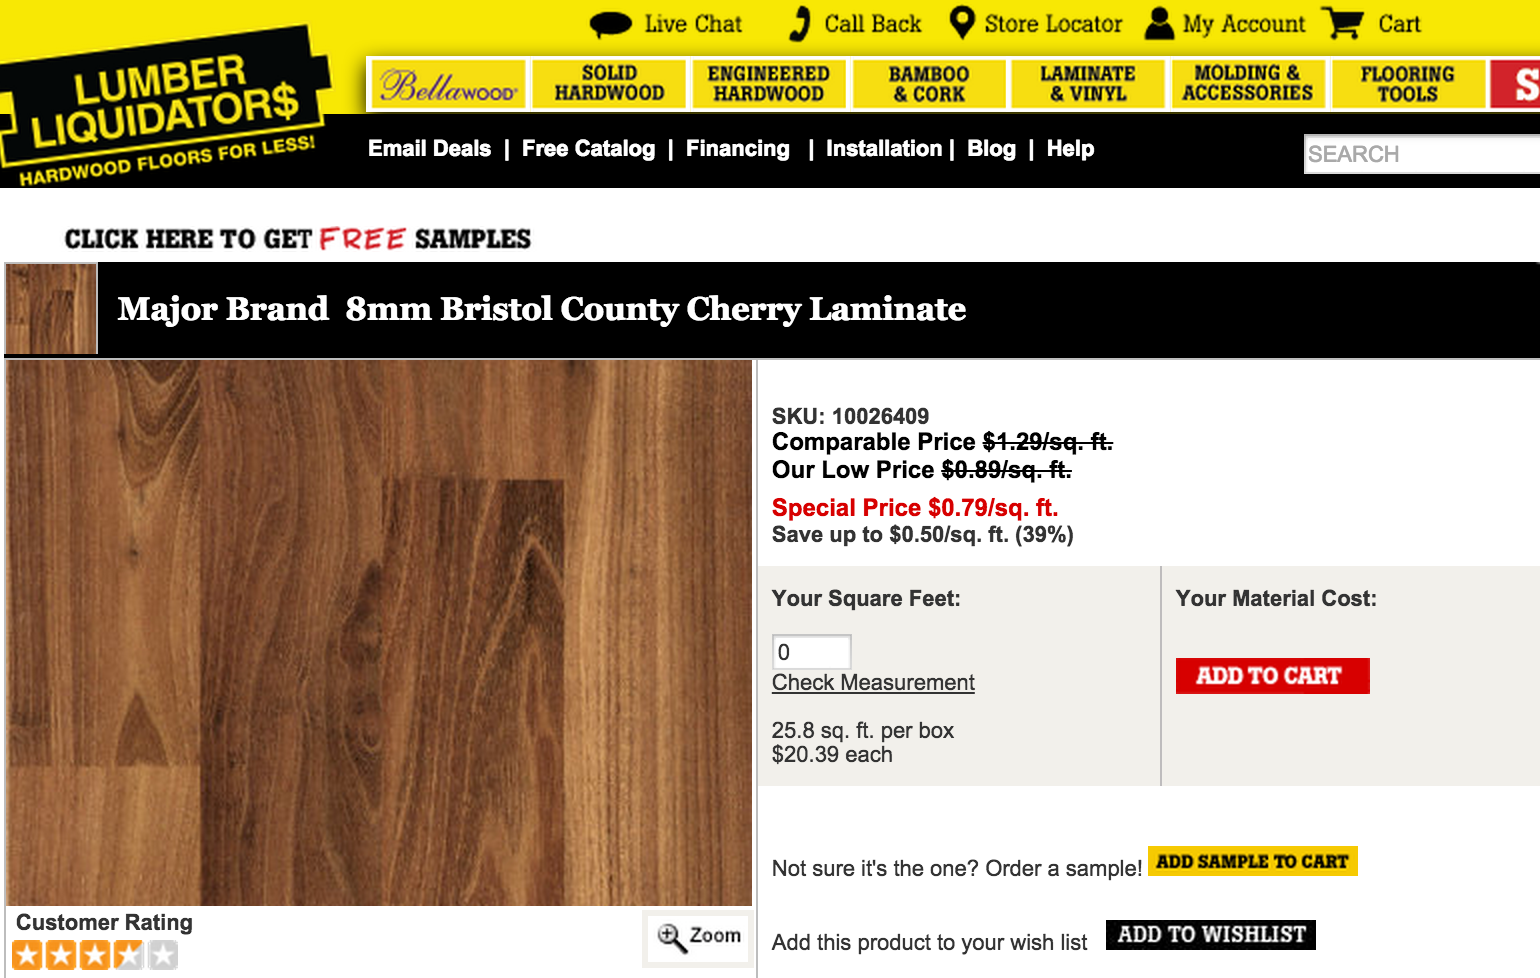 Lumber Liquidators Consumerist, How Much Does Lumber Liquidators Charge To Install Laminate Flooring